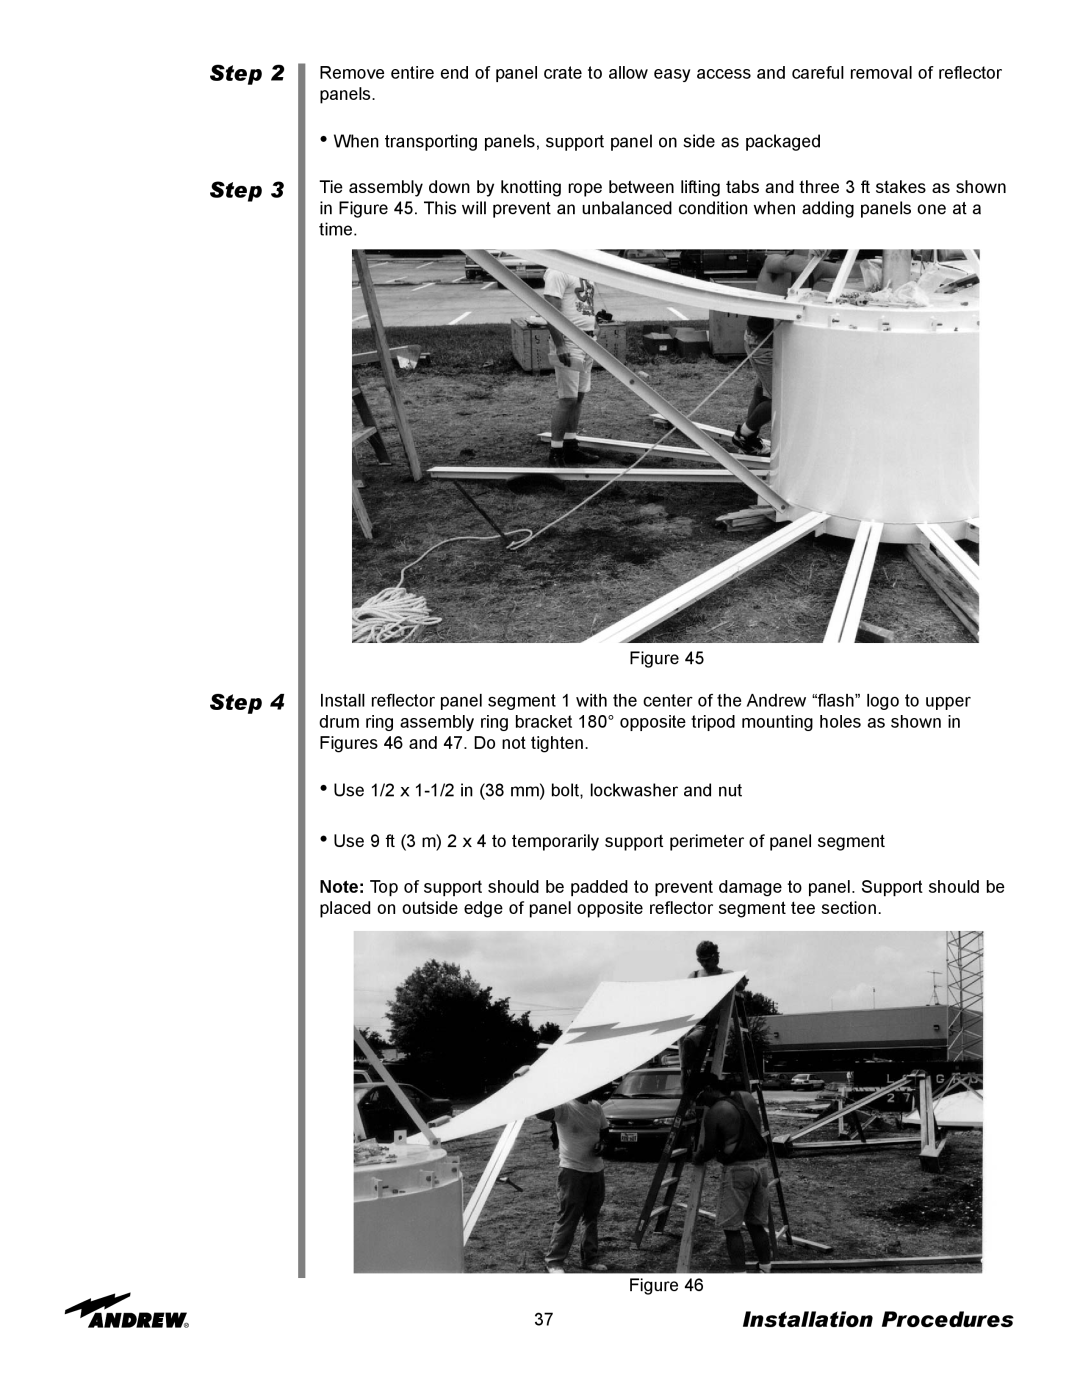 Andrew ES73 manual Step Step Step, Installation Procedures, Figure 